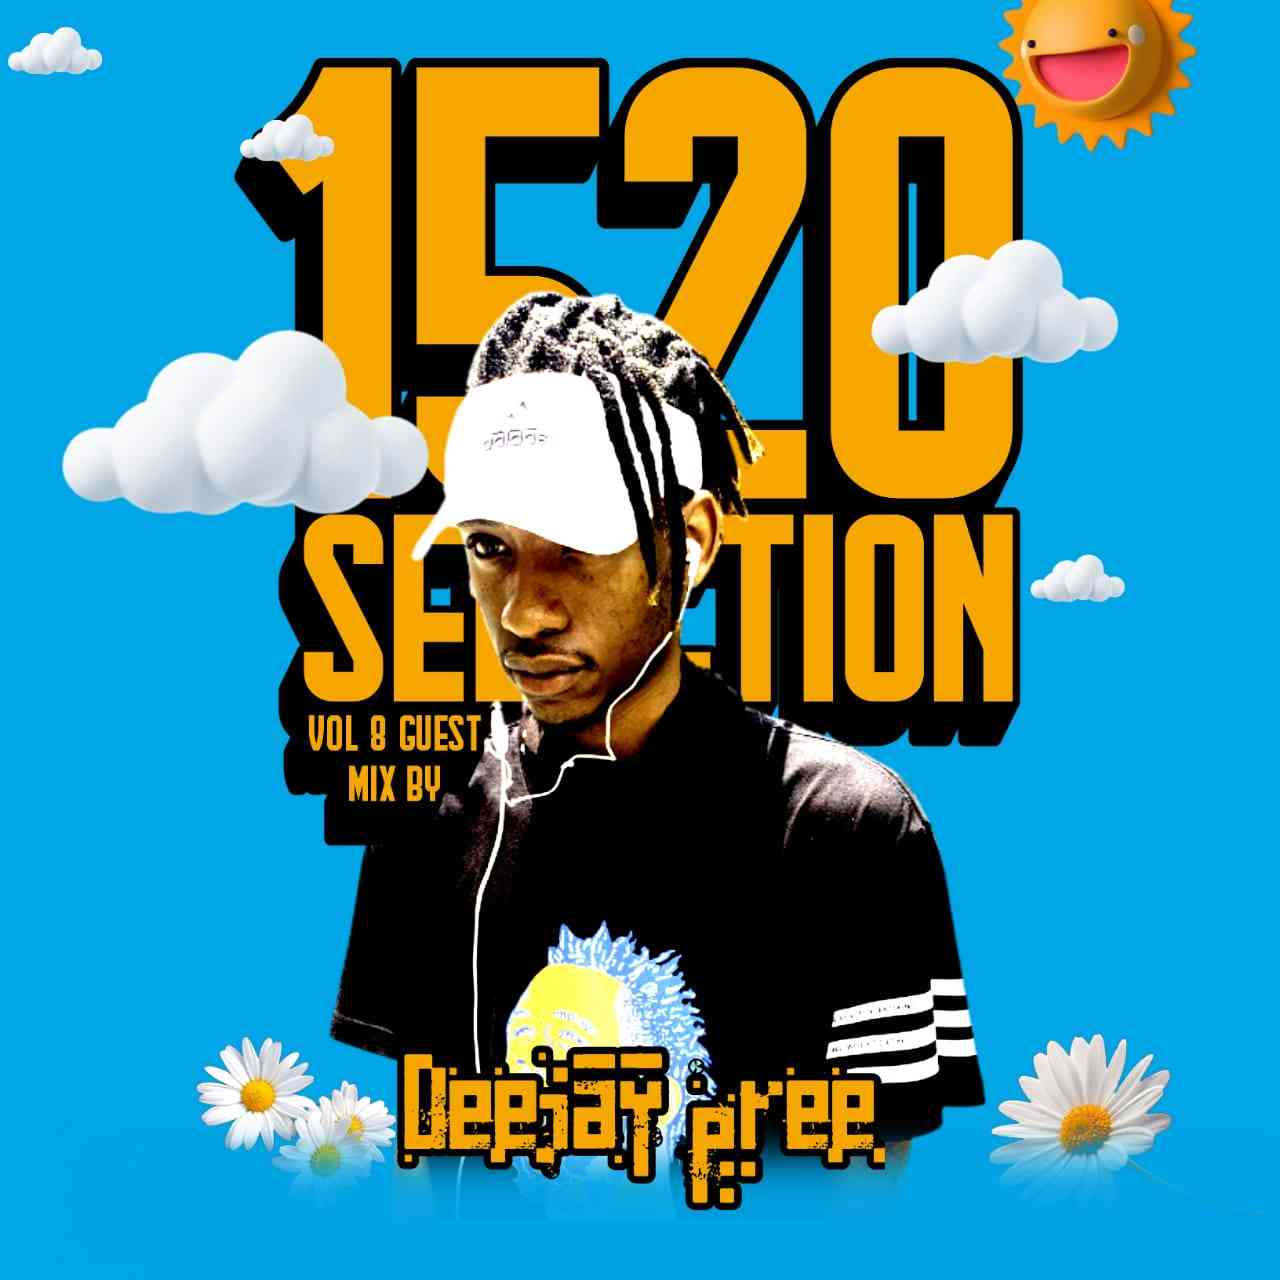 Deejay Pree - 1520 Selection Vol 8 Guest Mix